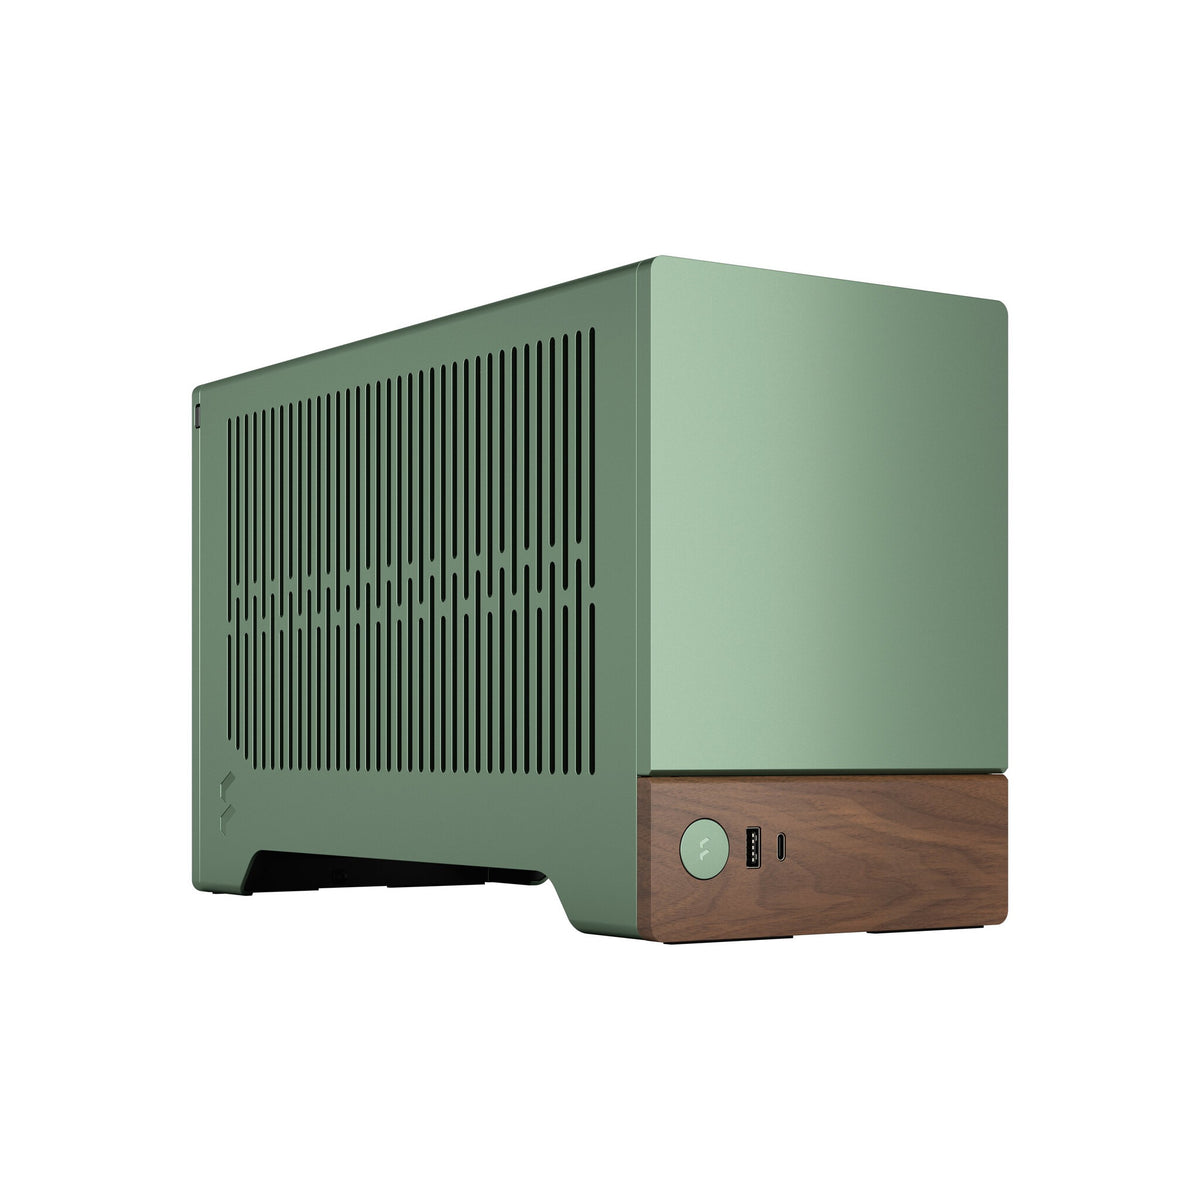 Fractal Design Terra - Mini ITX Desktop Case in Green